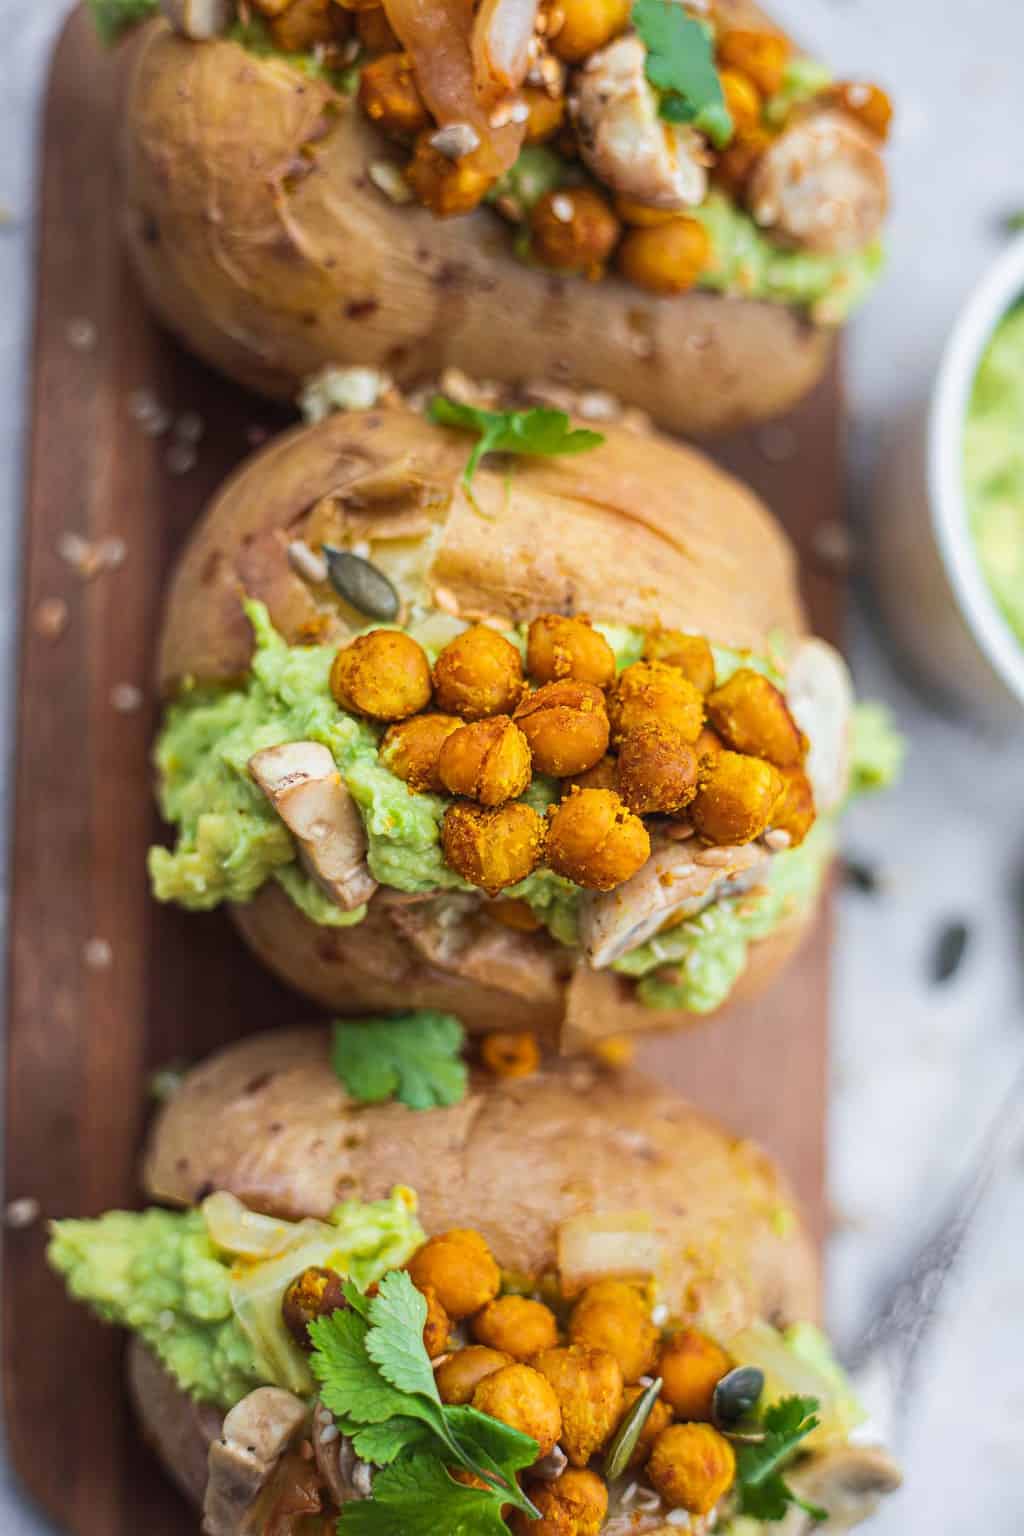 Vegan stuffed potatoes with chickpeas and avocado